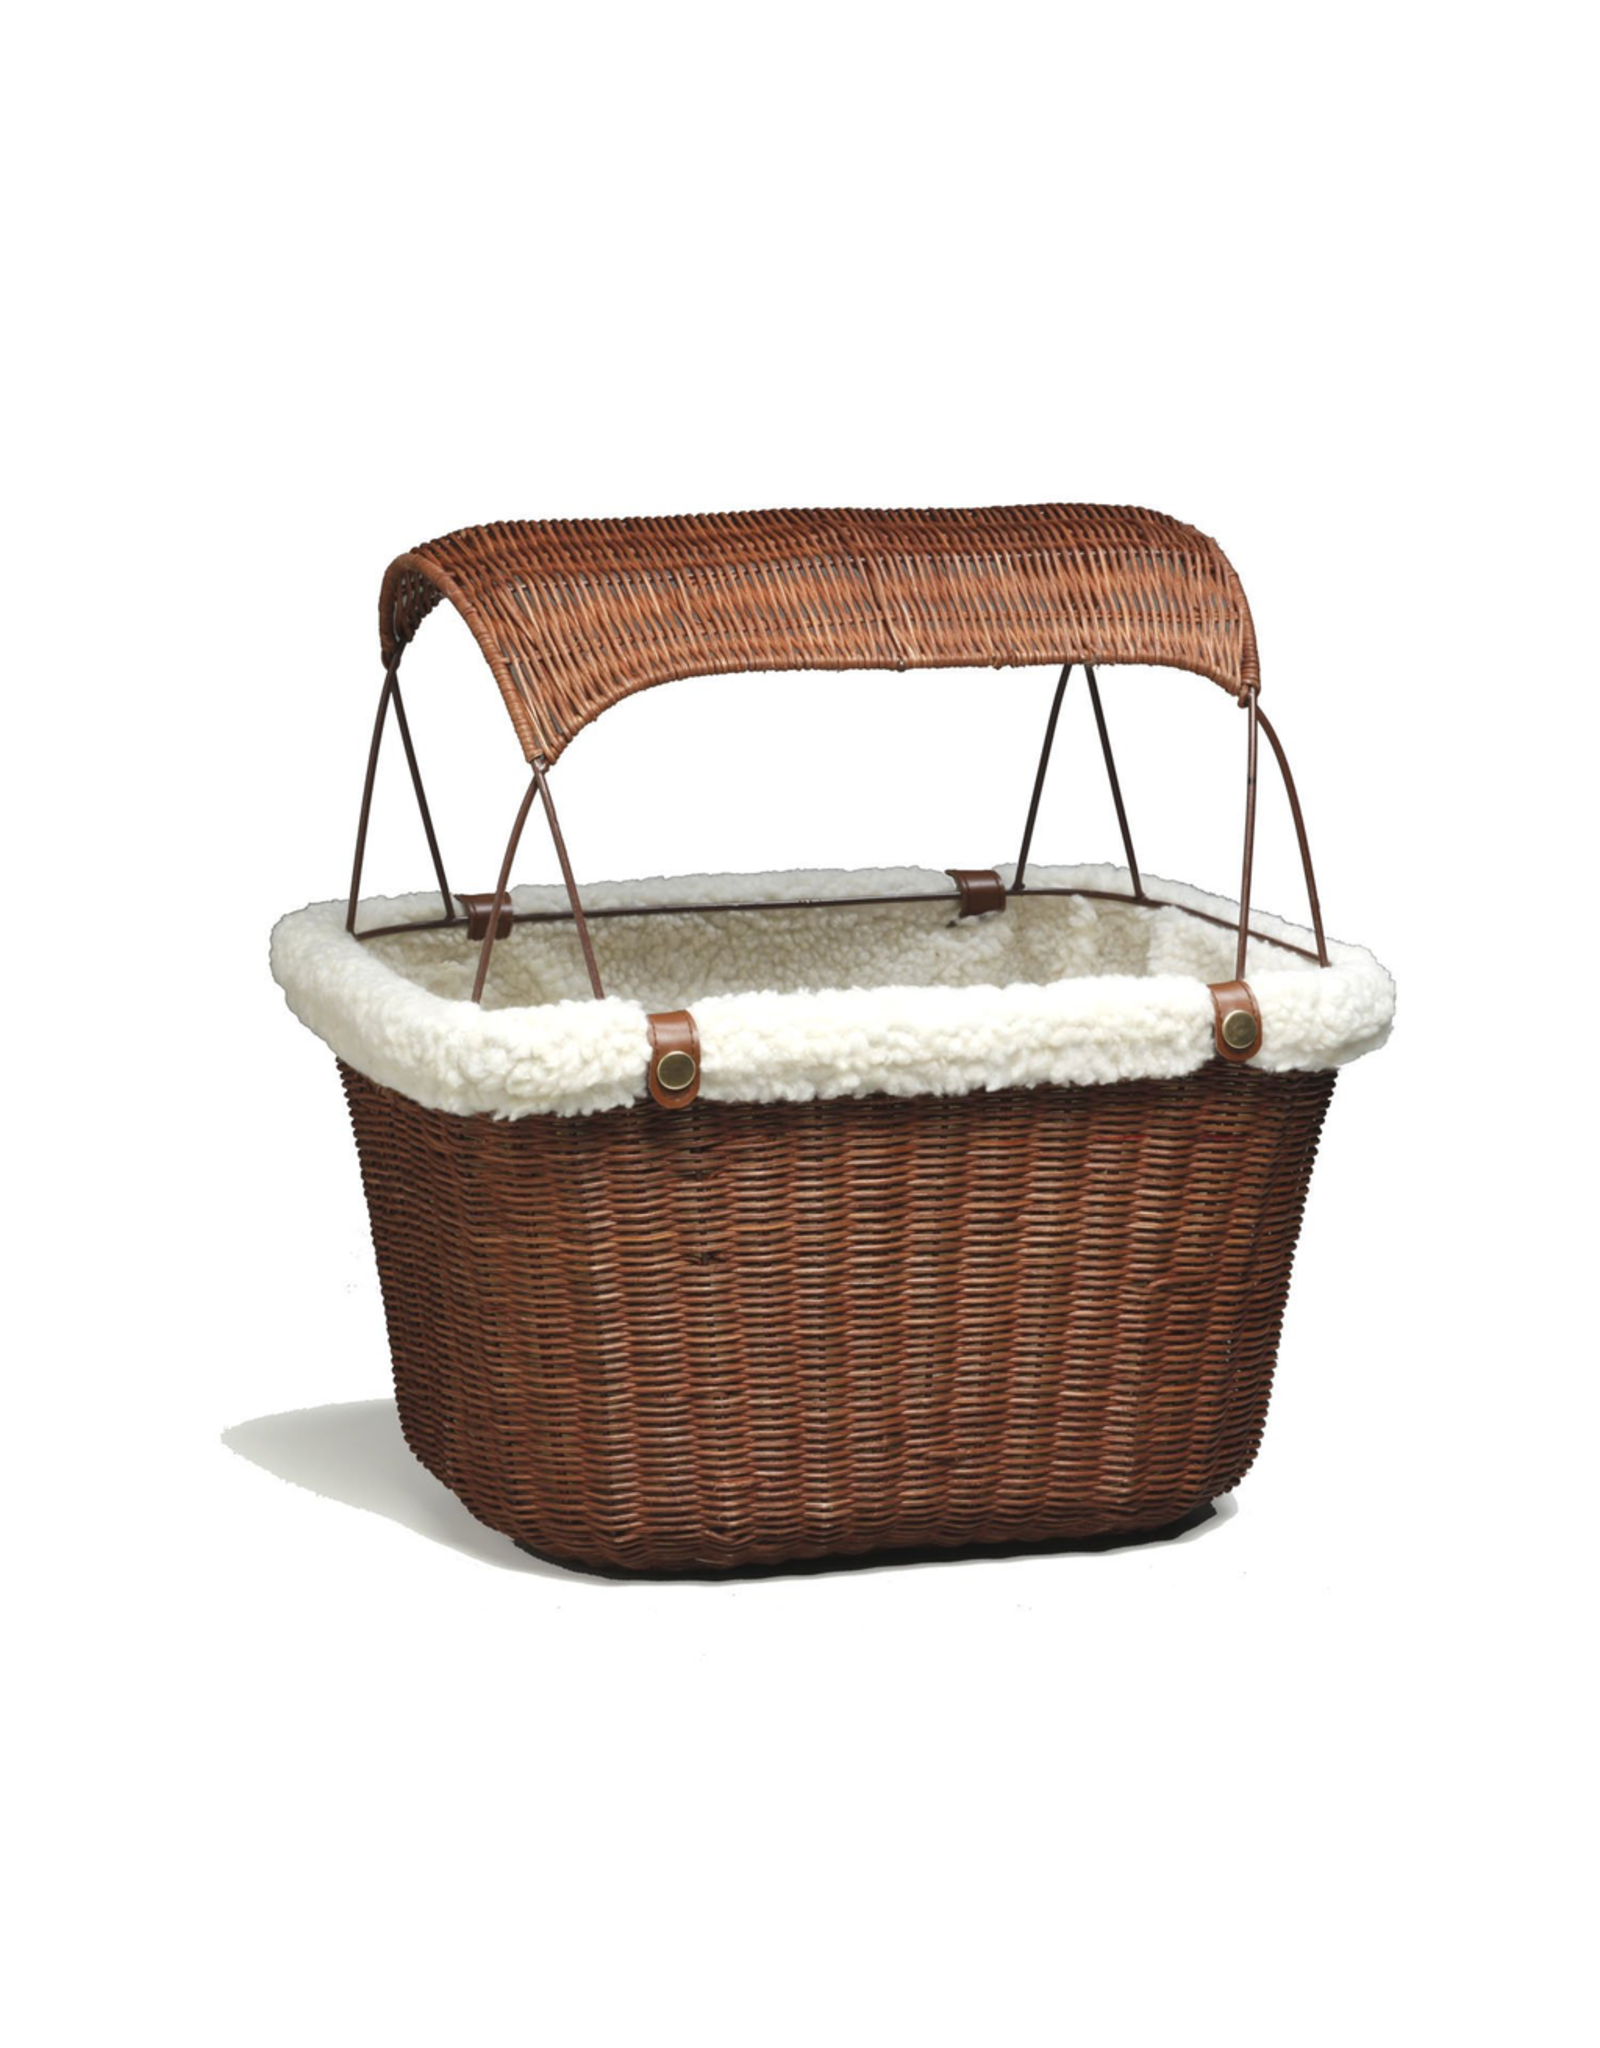 Solvit Happy Ride Wicker Pet Bicycle Basket- Includes Sun Shade, Brown